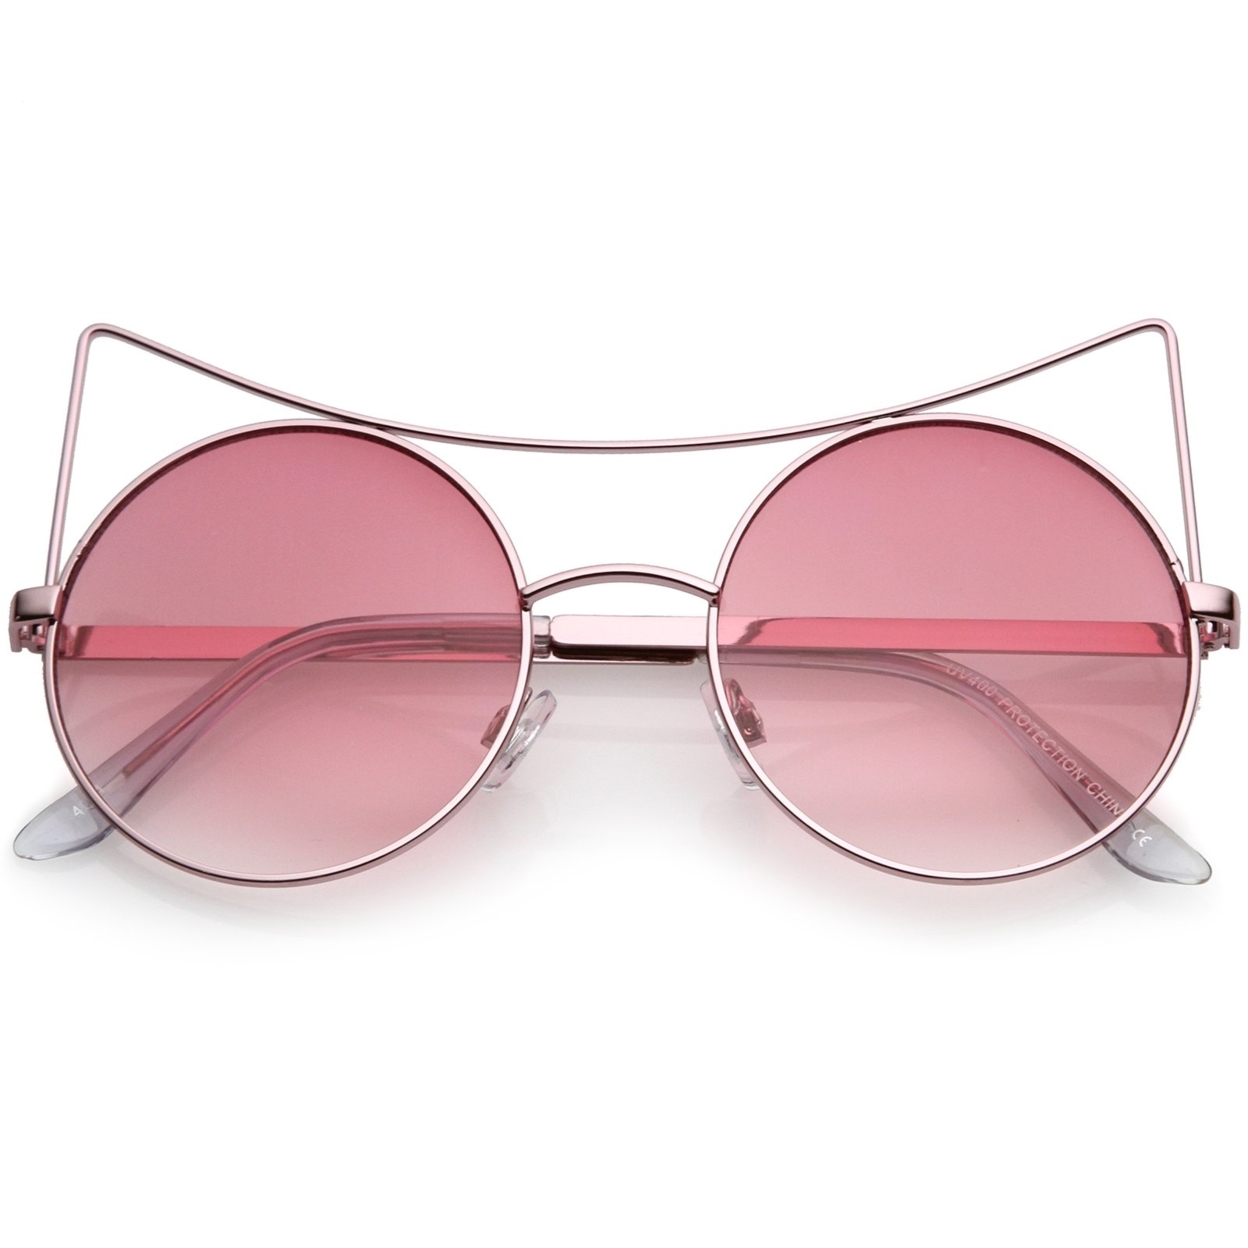 Women's Oversize Open Metal Gradient Round Flat Lens Cat Eye Sunglasses 54mm - White / Smoke Gradient